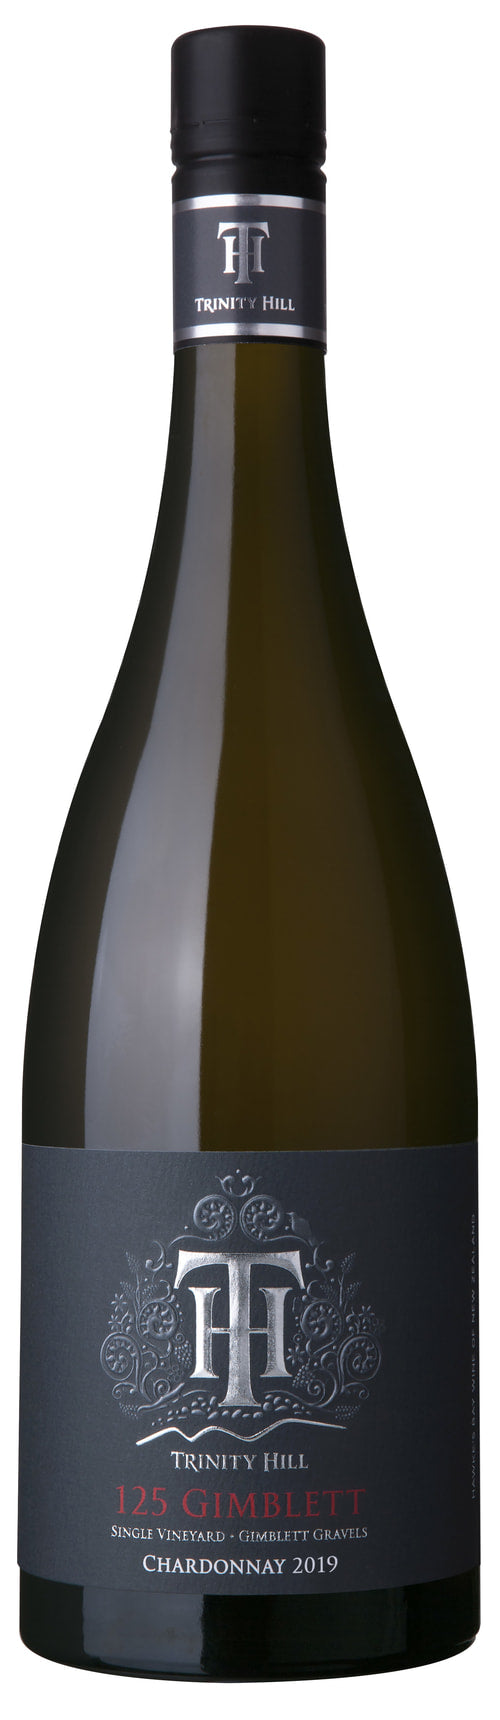 TRINITY HILL '125 GIMBLETT' Chardonnay 2020   (750ml)